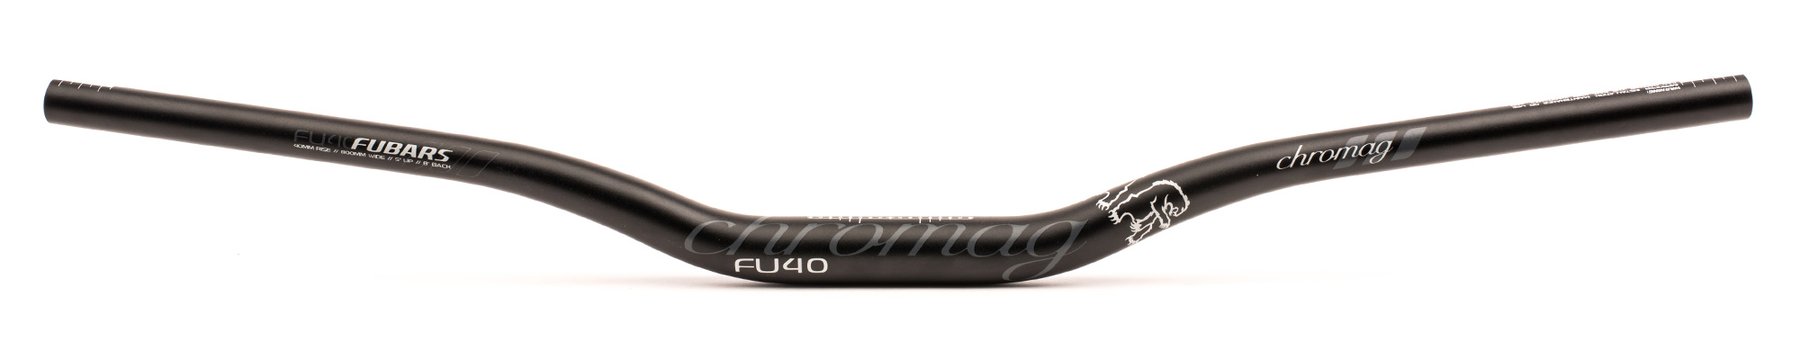 Produktbild von CHROMAG Fubars FU40 Rizer Bar 31.8 MTB-Lenker - 800mm - schwarz